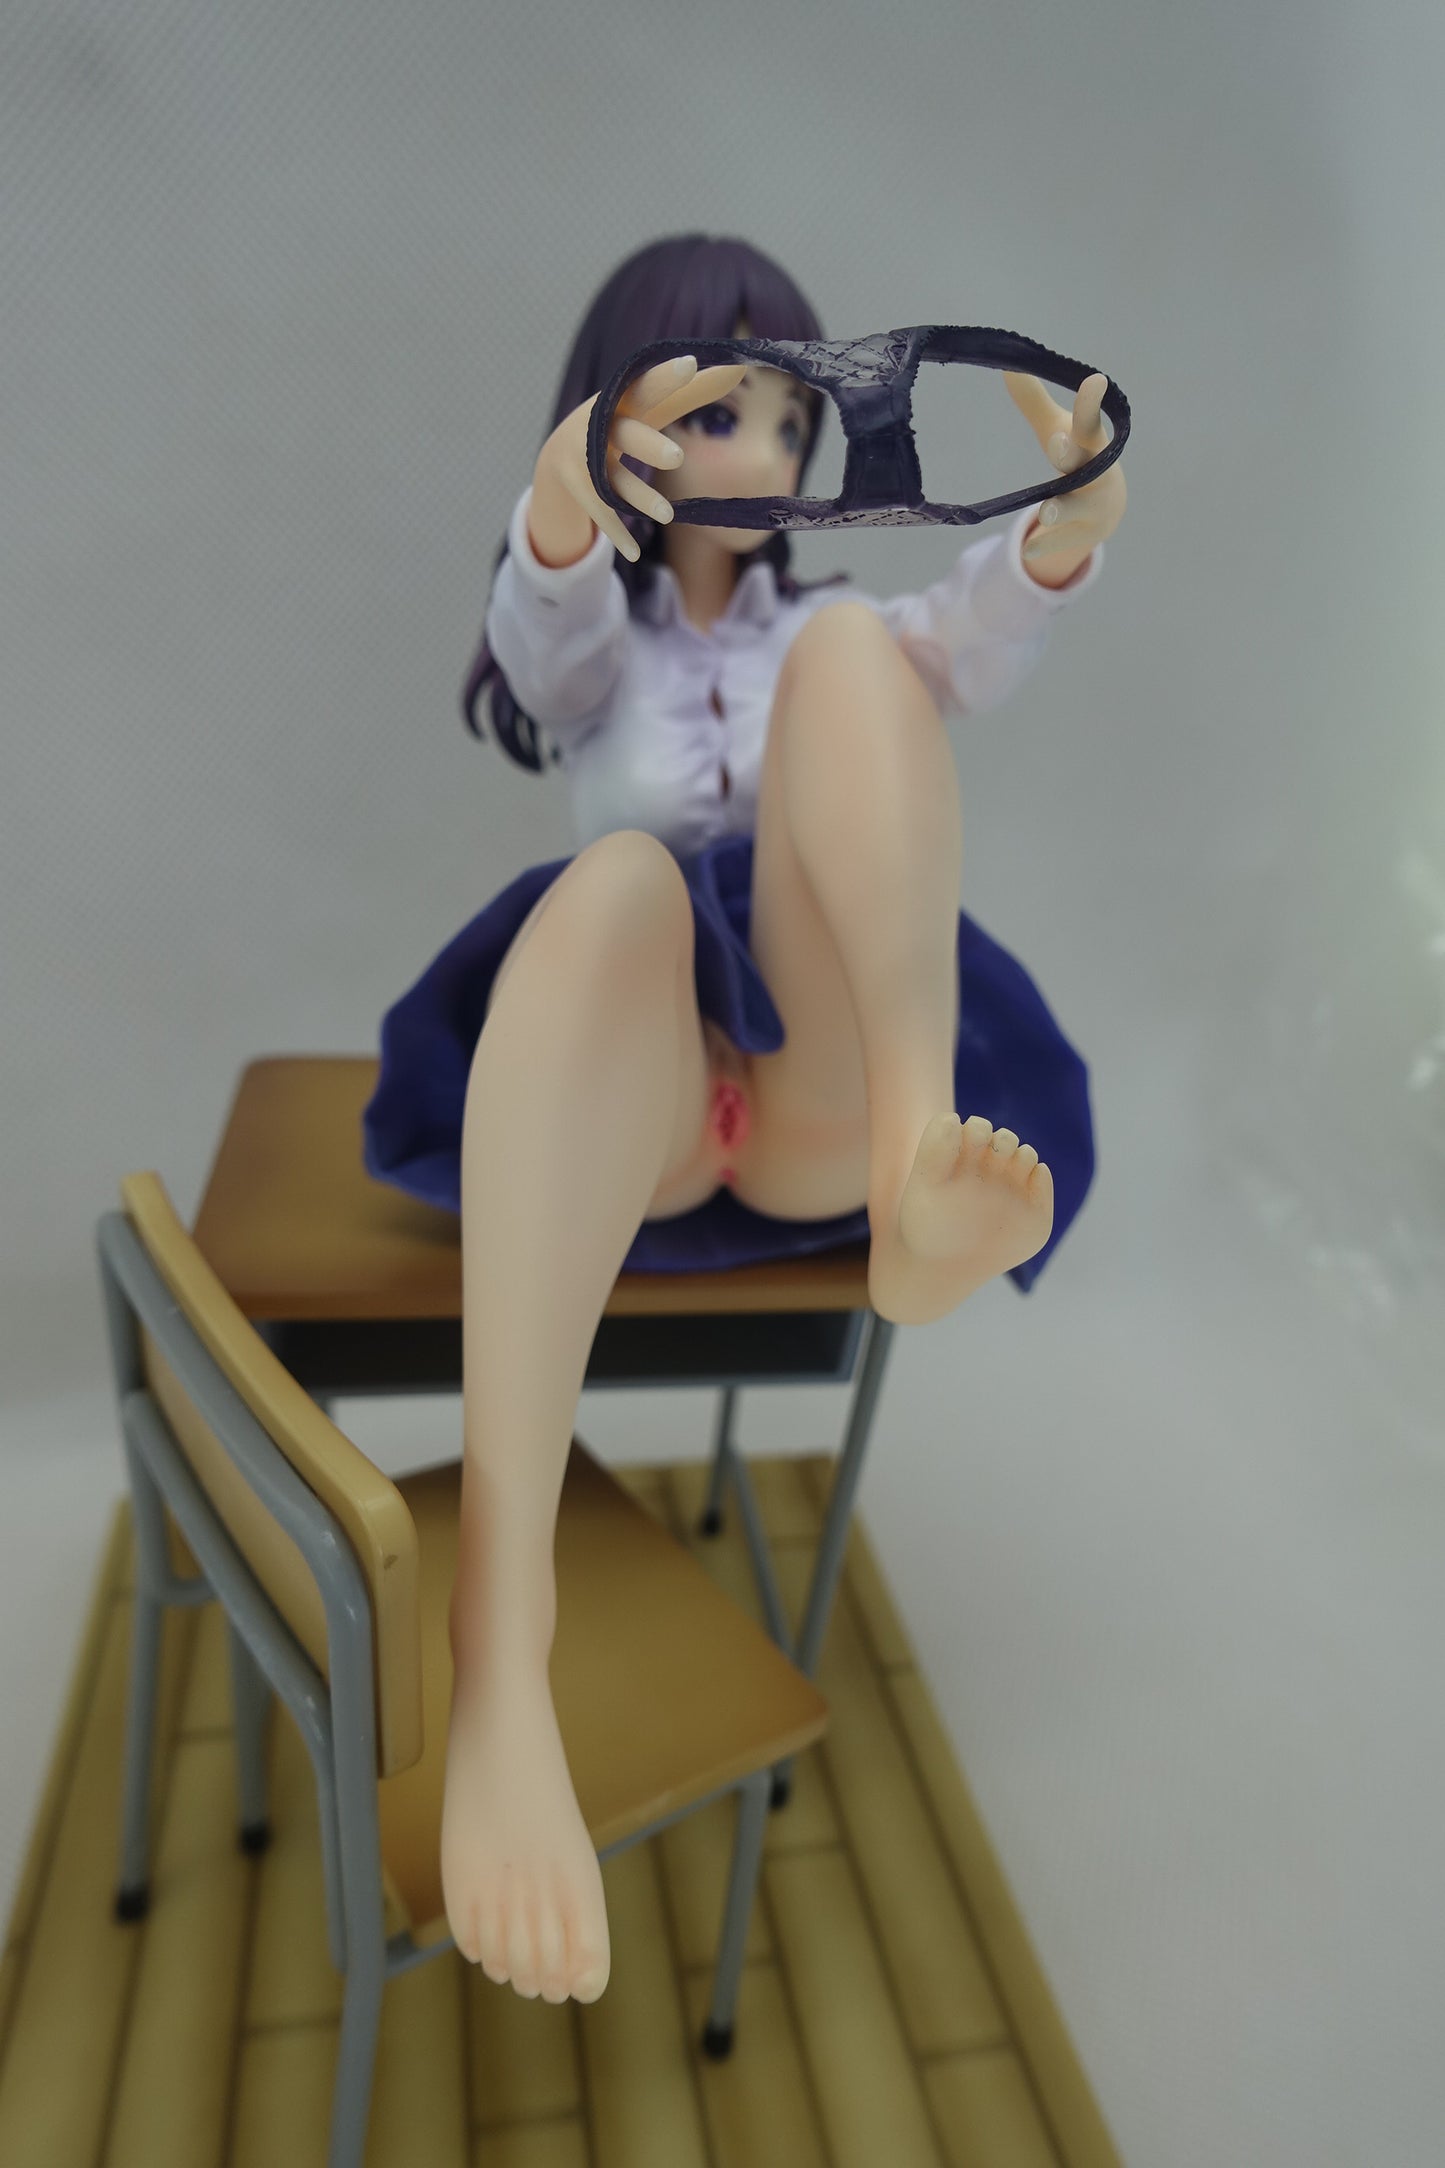 Kazekaoru Houkago Illustrated By Hitomio Action Figure 1/6 naked anime figure sexy